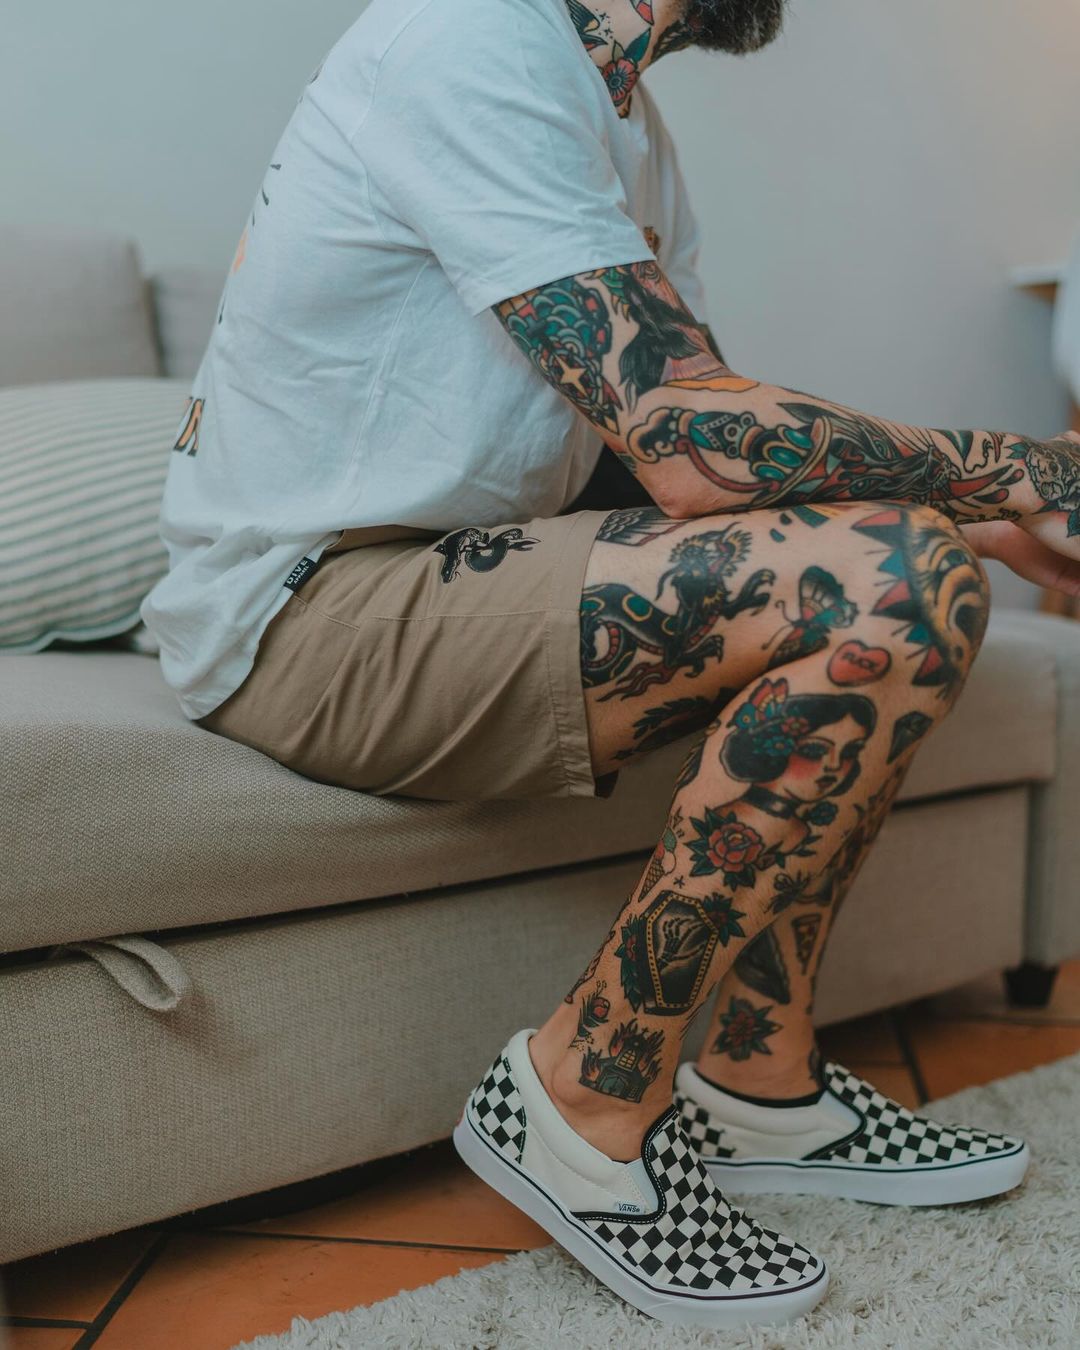 Full leg sleeve tattoo ideas by wolfoutwest